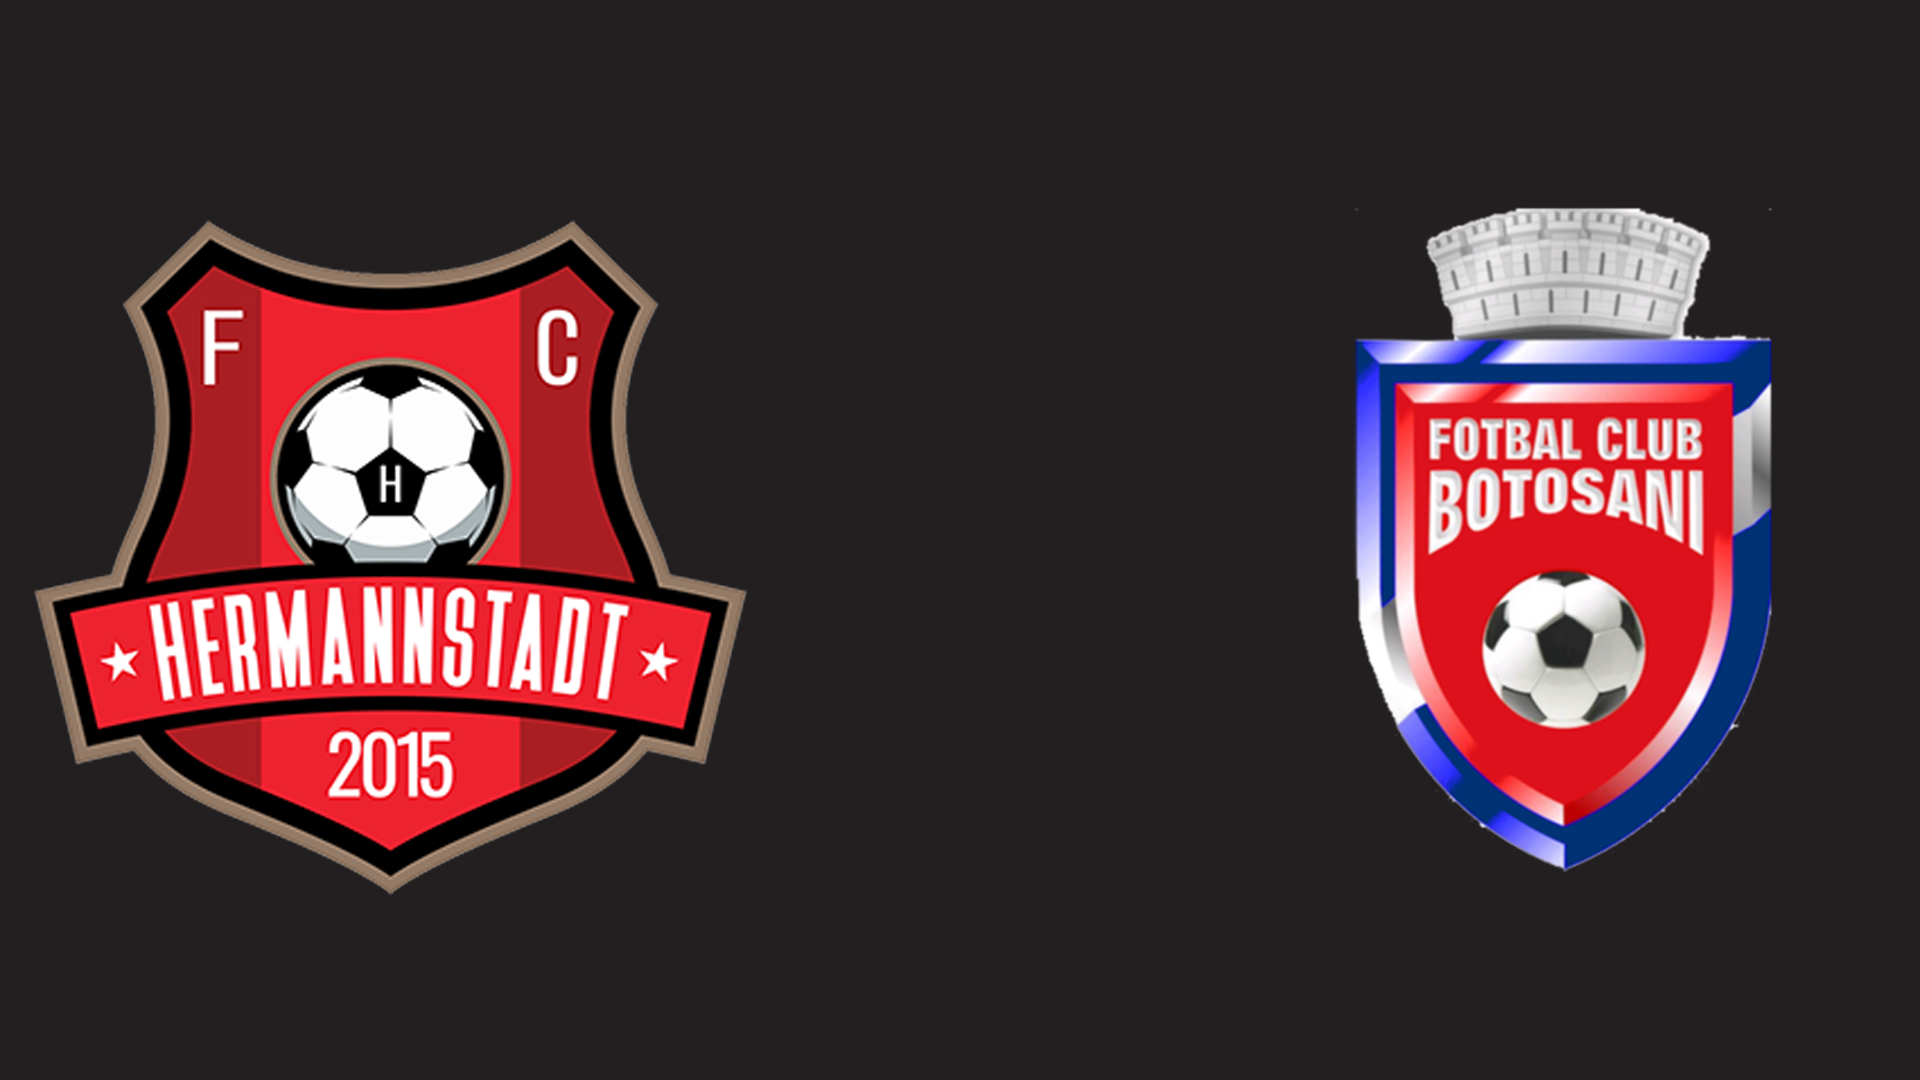 Live video Hermannstadt - Botoșani SCOR 2-1. Hermannstadt înscrie în ultimele minute